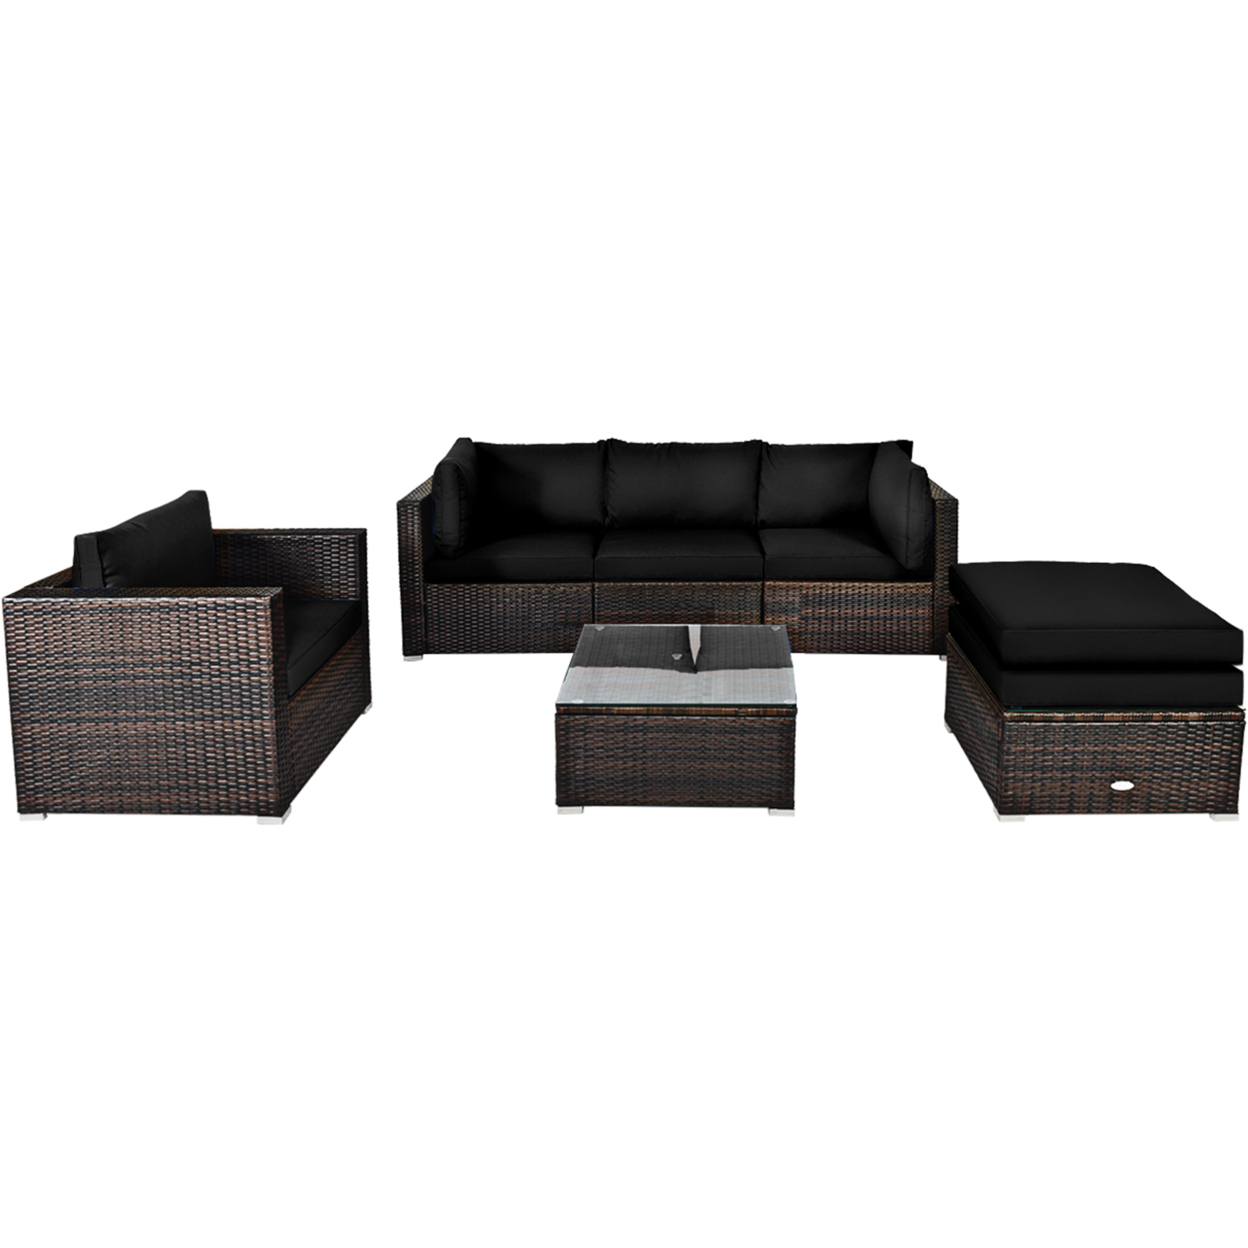 6PCS Patio Conversation Set Rattan Sectional Furniture Set W/ Black Cushions